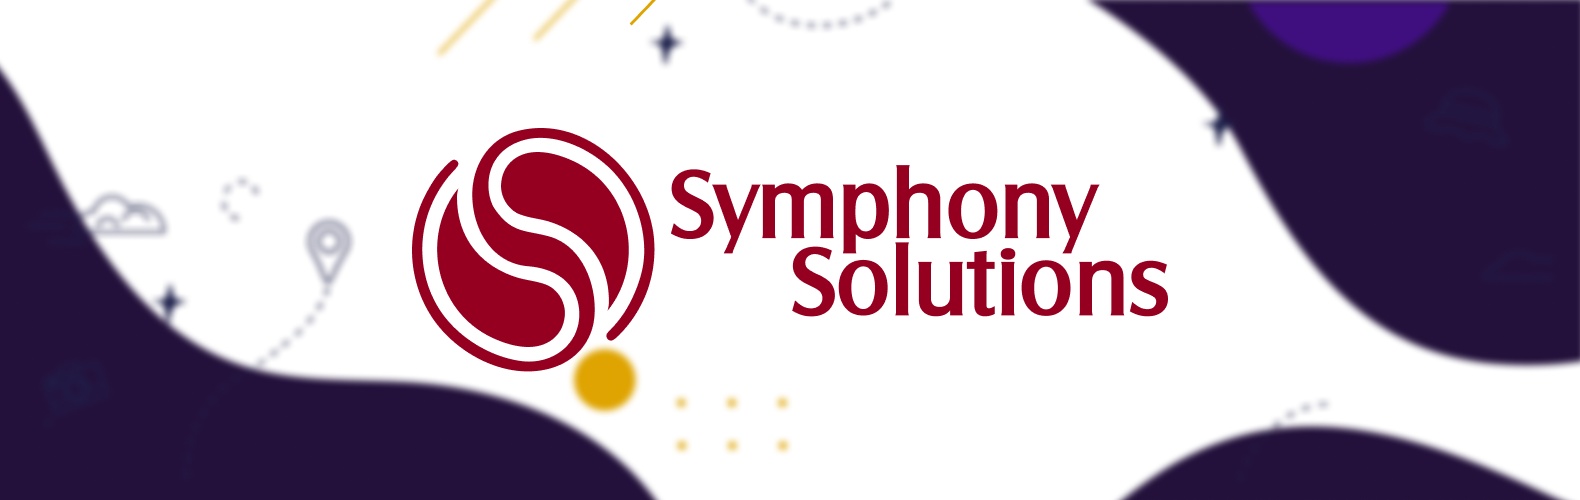 Symphony Solutions